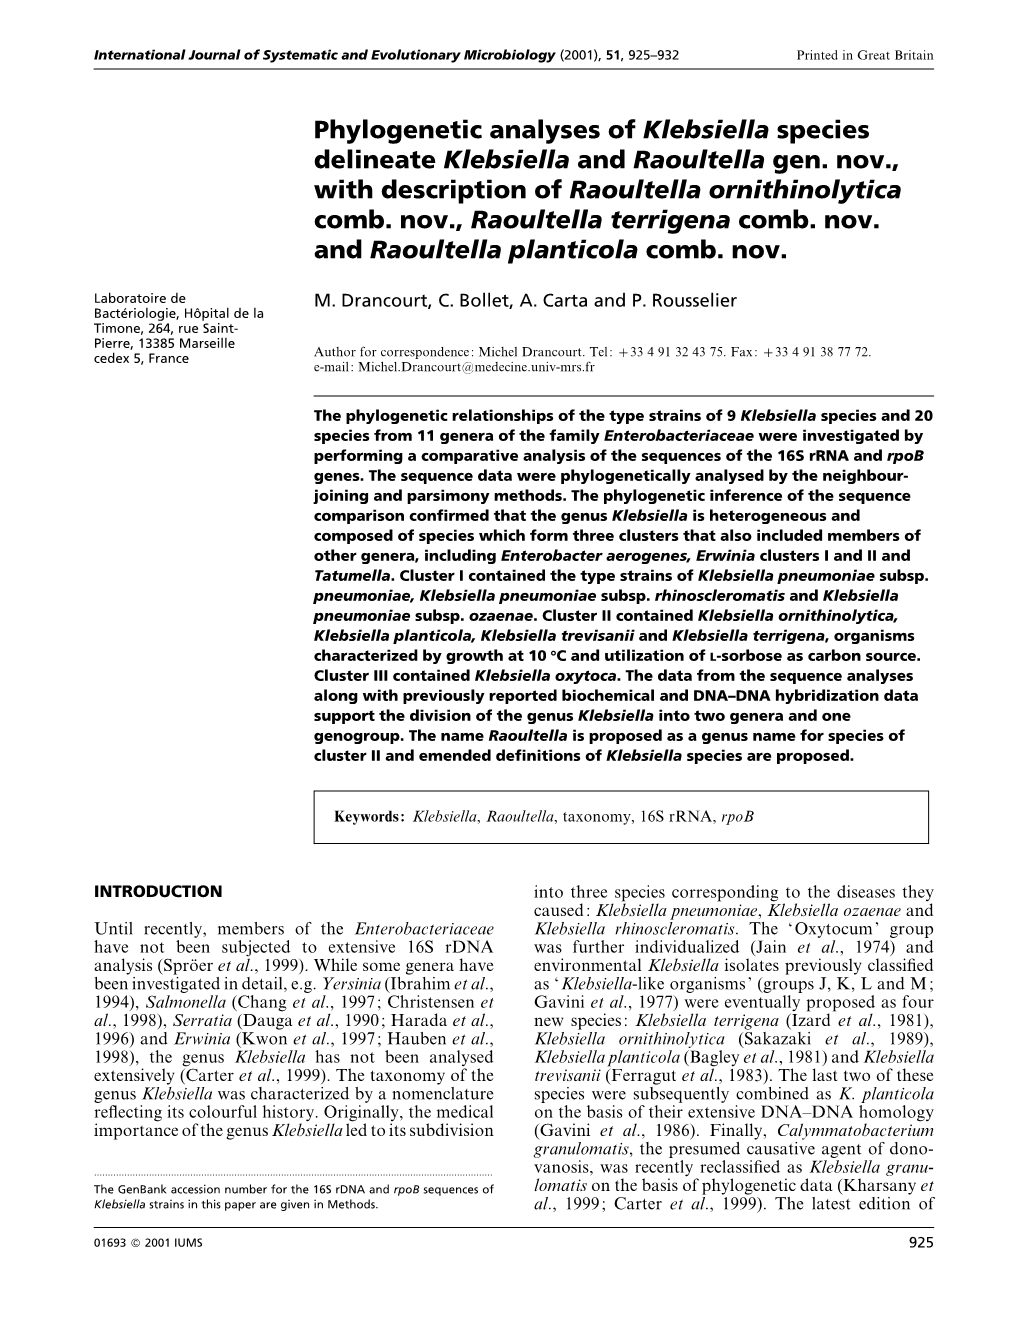 Phylogenetic Analyses of Klebsiella Species Delineate Klebsiella and Raoultella Gen